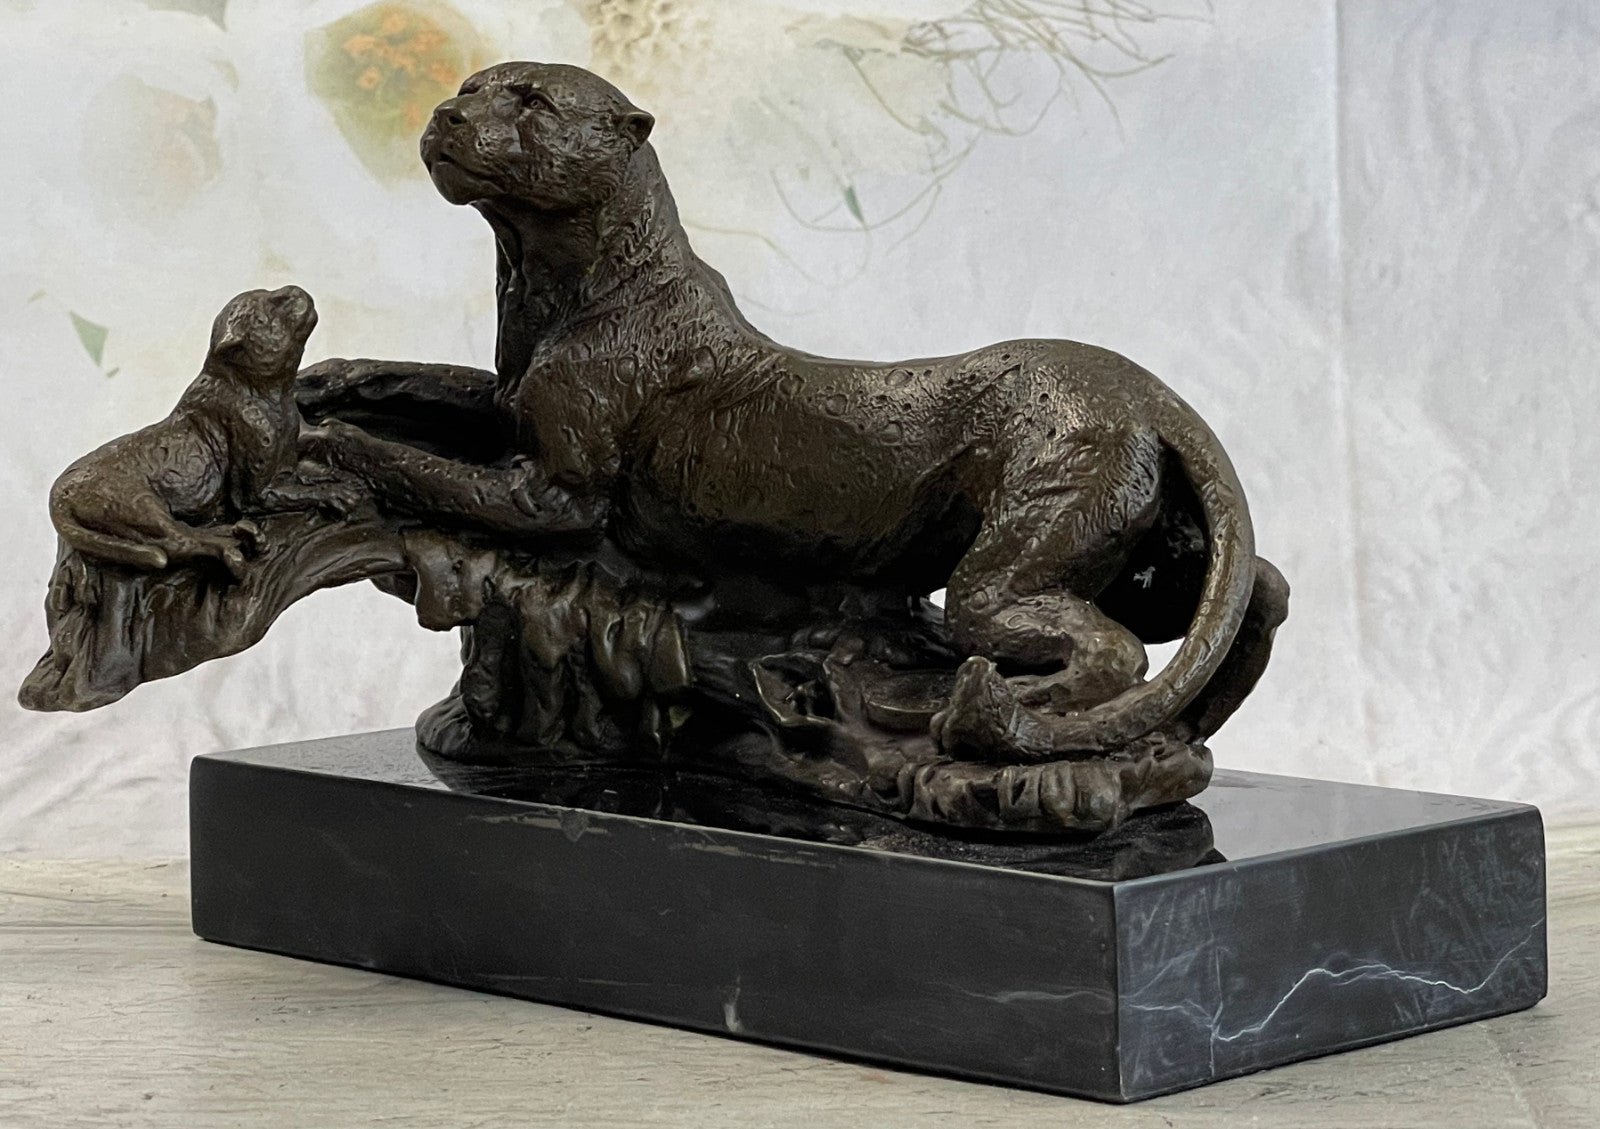 CAT JAGUAR PANTHER COUGAR Handcrafted Decor Bronze Sculpture Statue Figurine Art